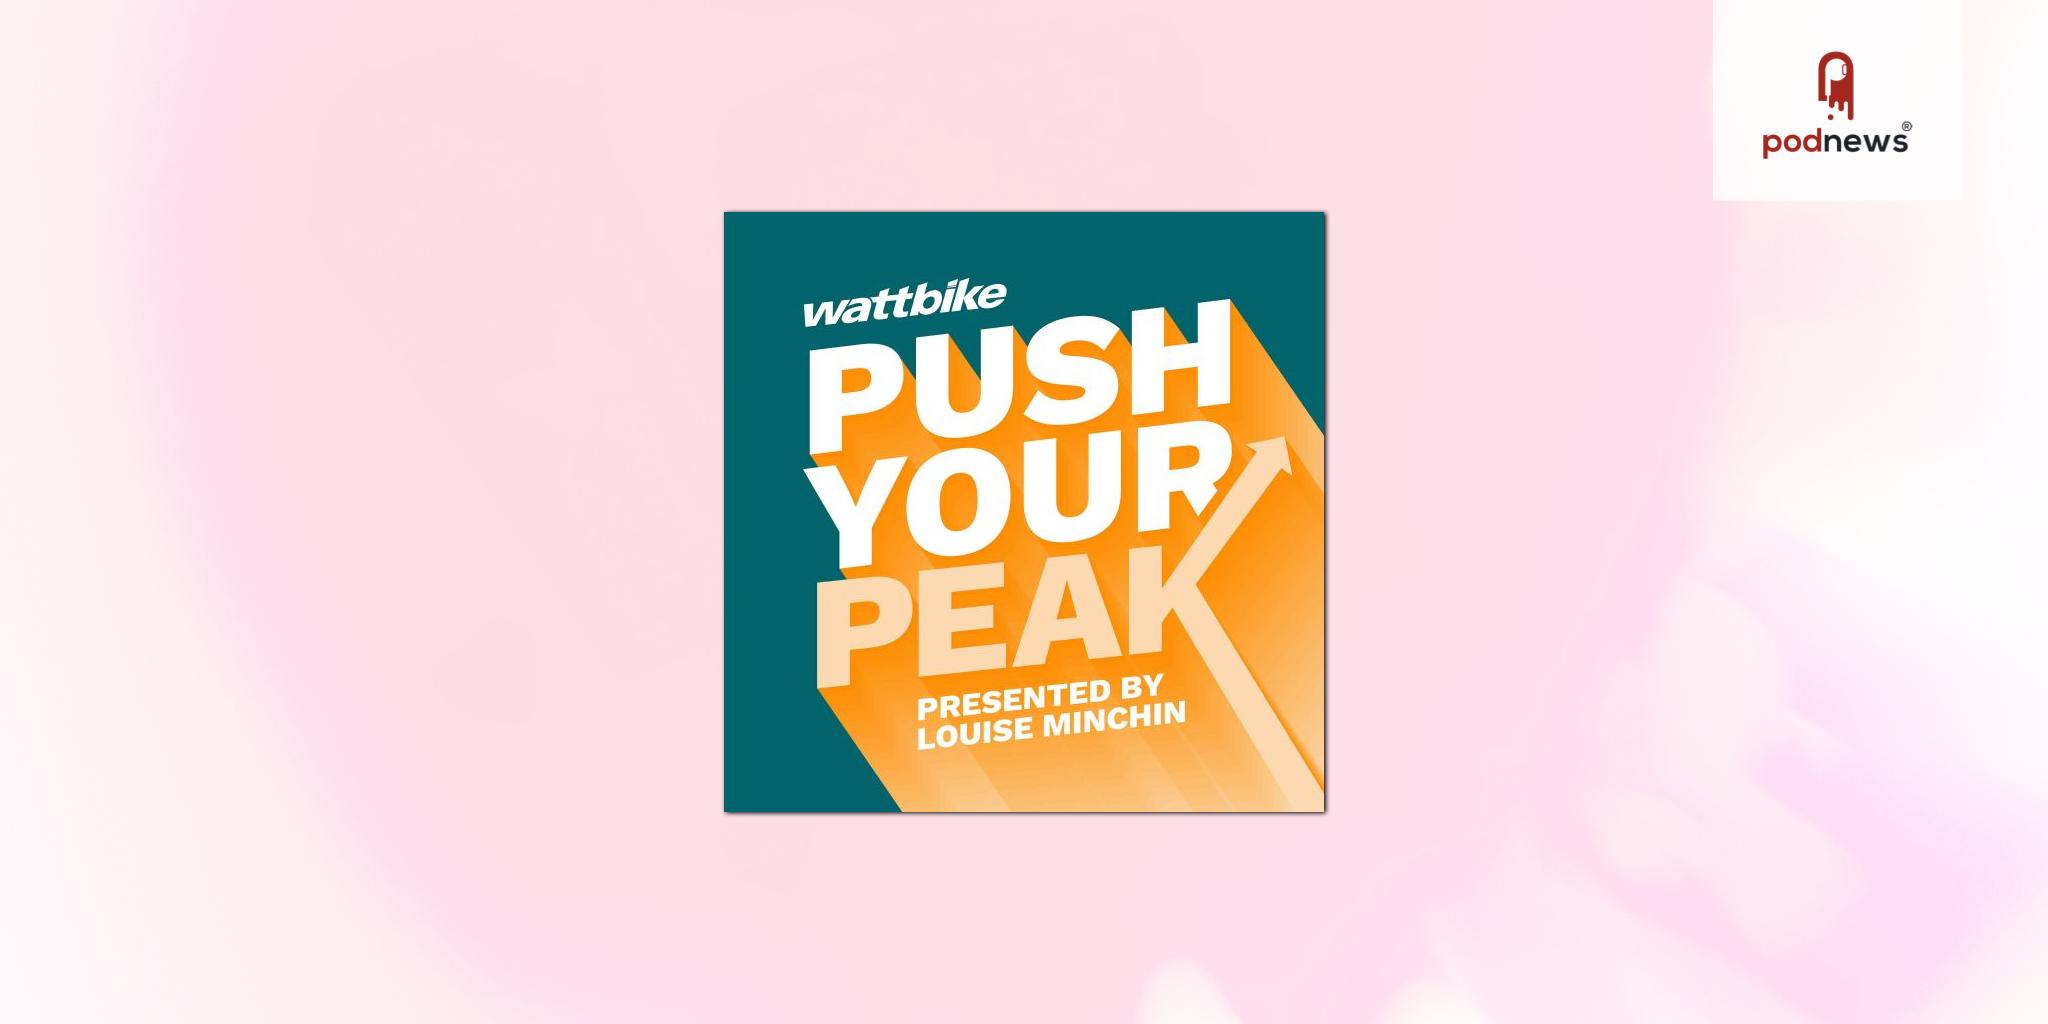 Wattbike launches Push Your Peak presented by Louise Minchin